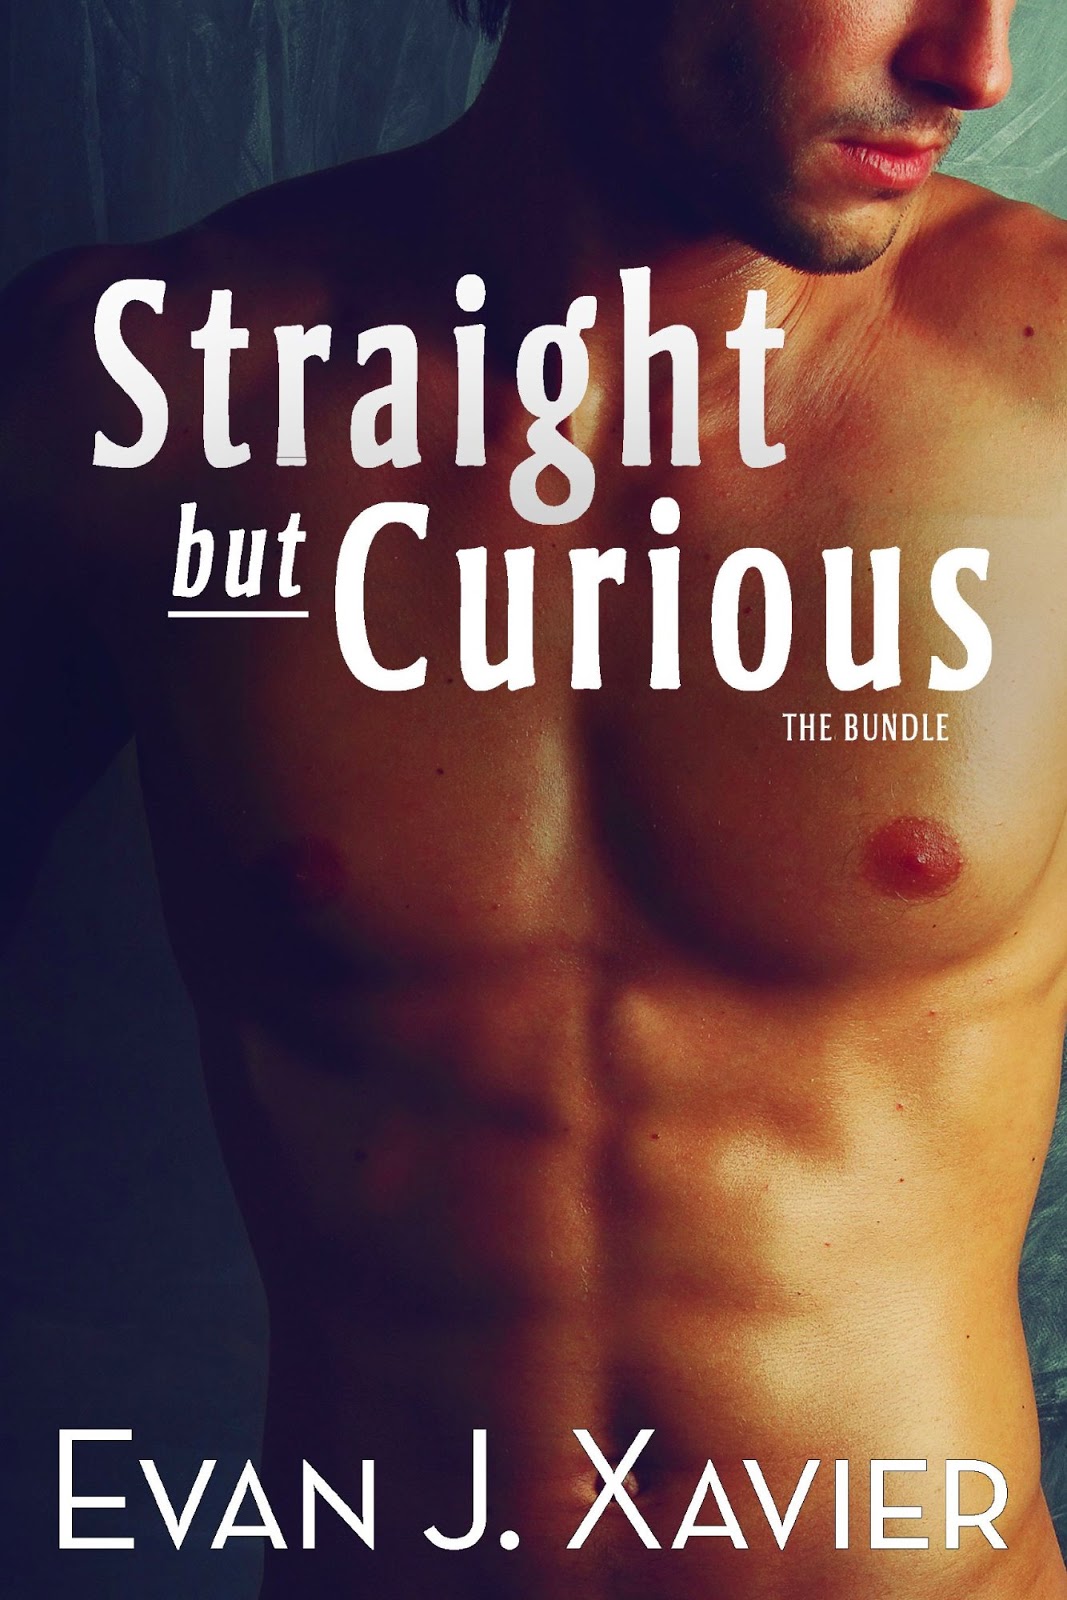 Straight-curious